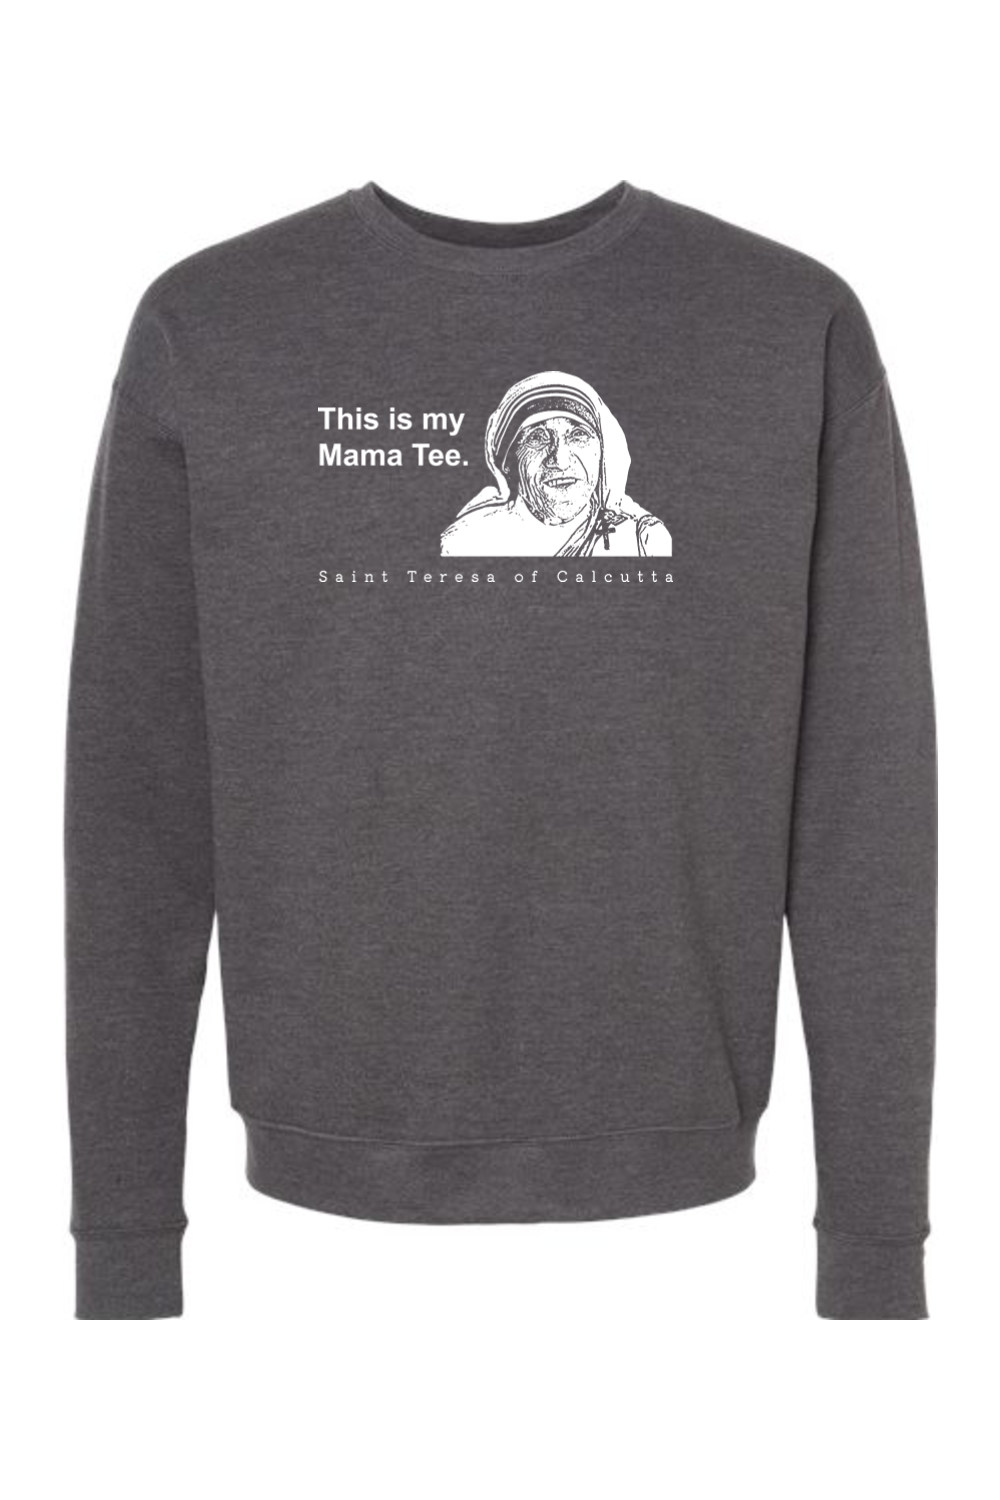 Mama Tee - Mother Teresa Crewneck Sweatshirt